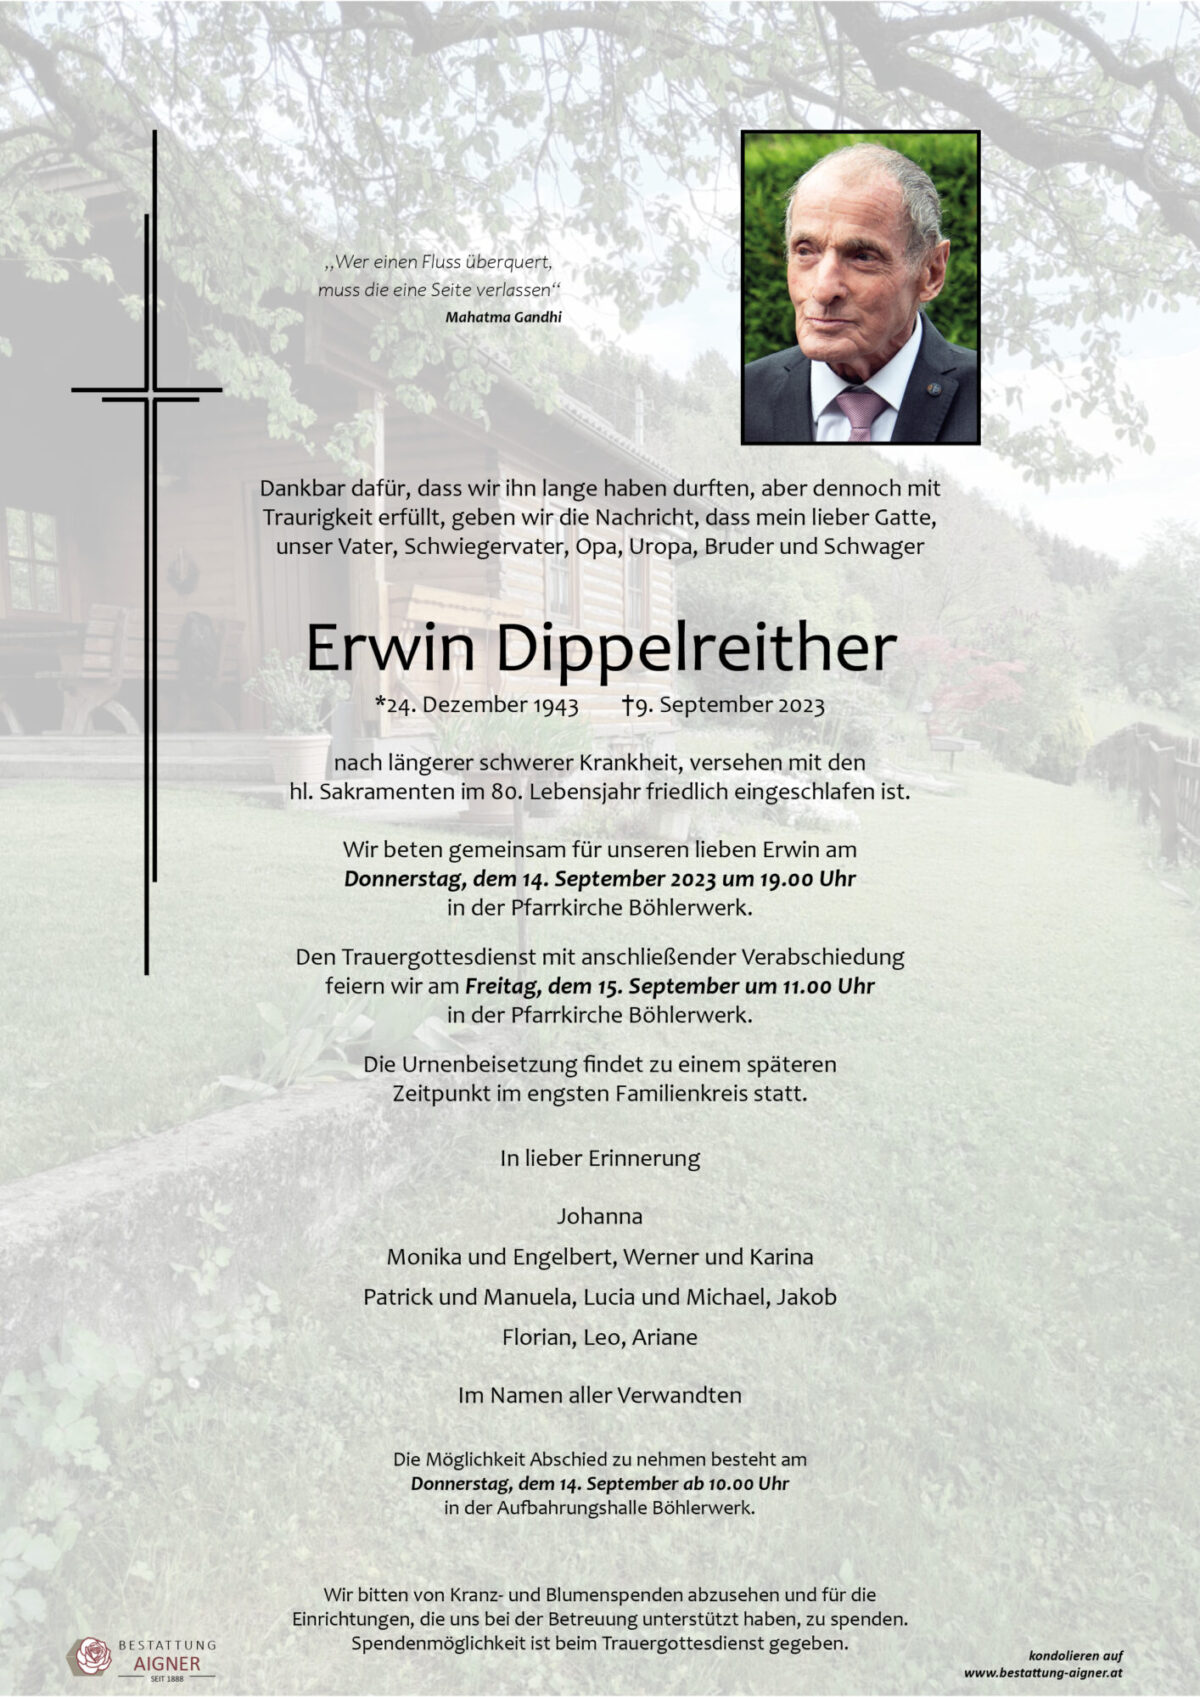 Erwin Dippelreither